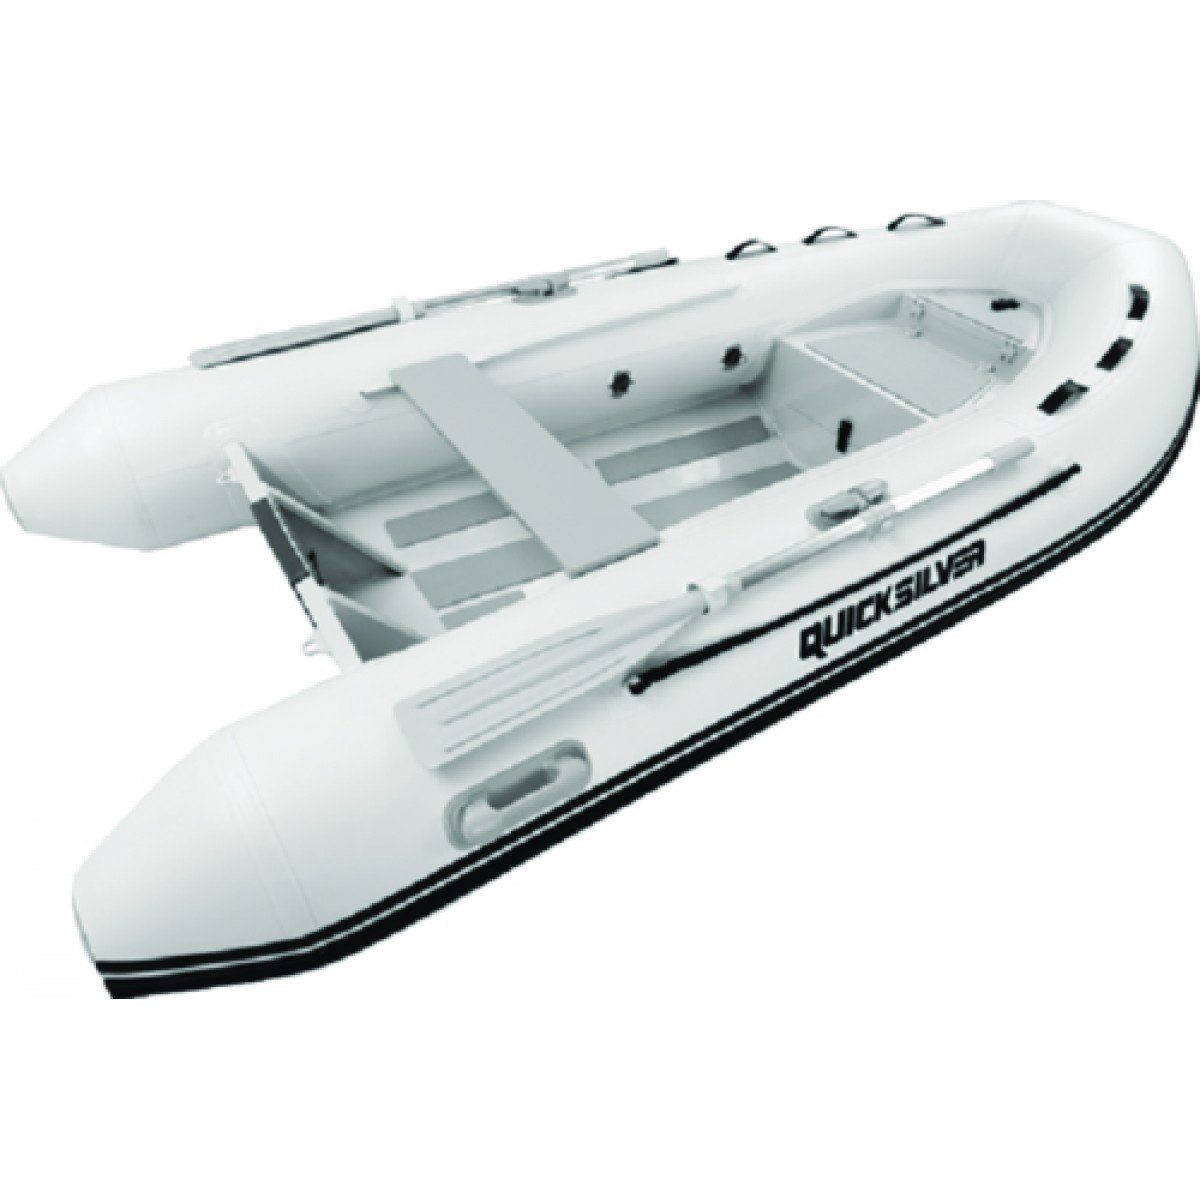 Quicksilver 420 Aluminum Double Hull RIB Inflatable Boat PVC - AA420005N